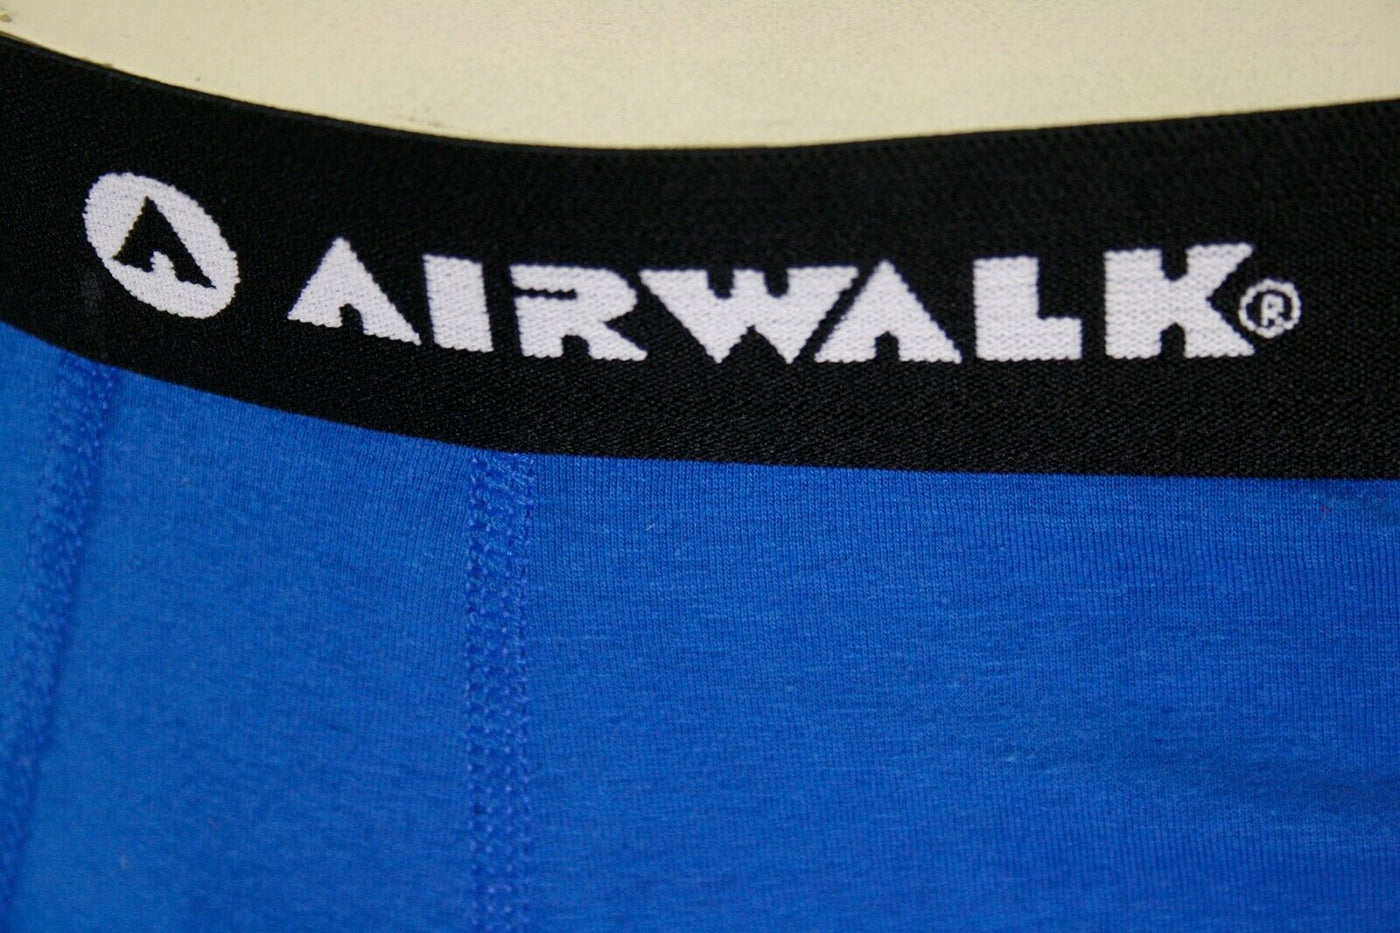 Airwalk Men's 3 Pack Blue Grey Charcoal Boxer Brief